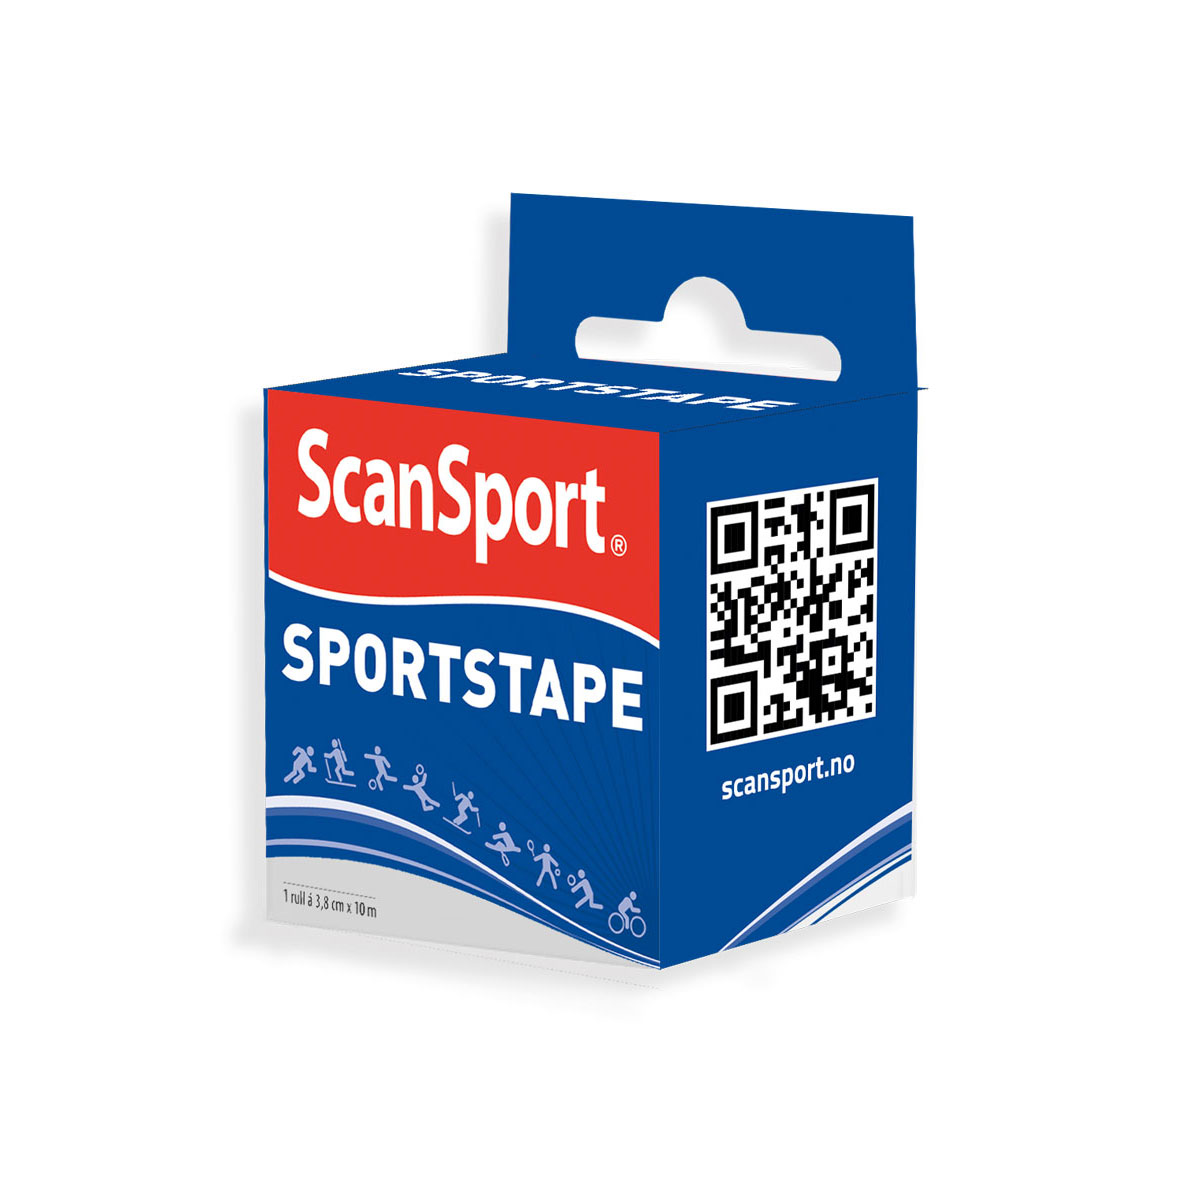 REF 45613 ScanSport Sportstape